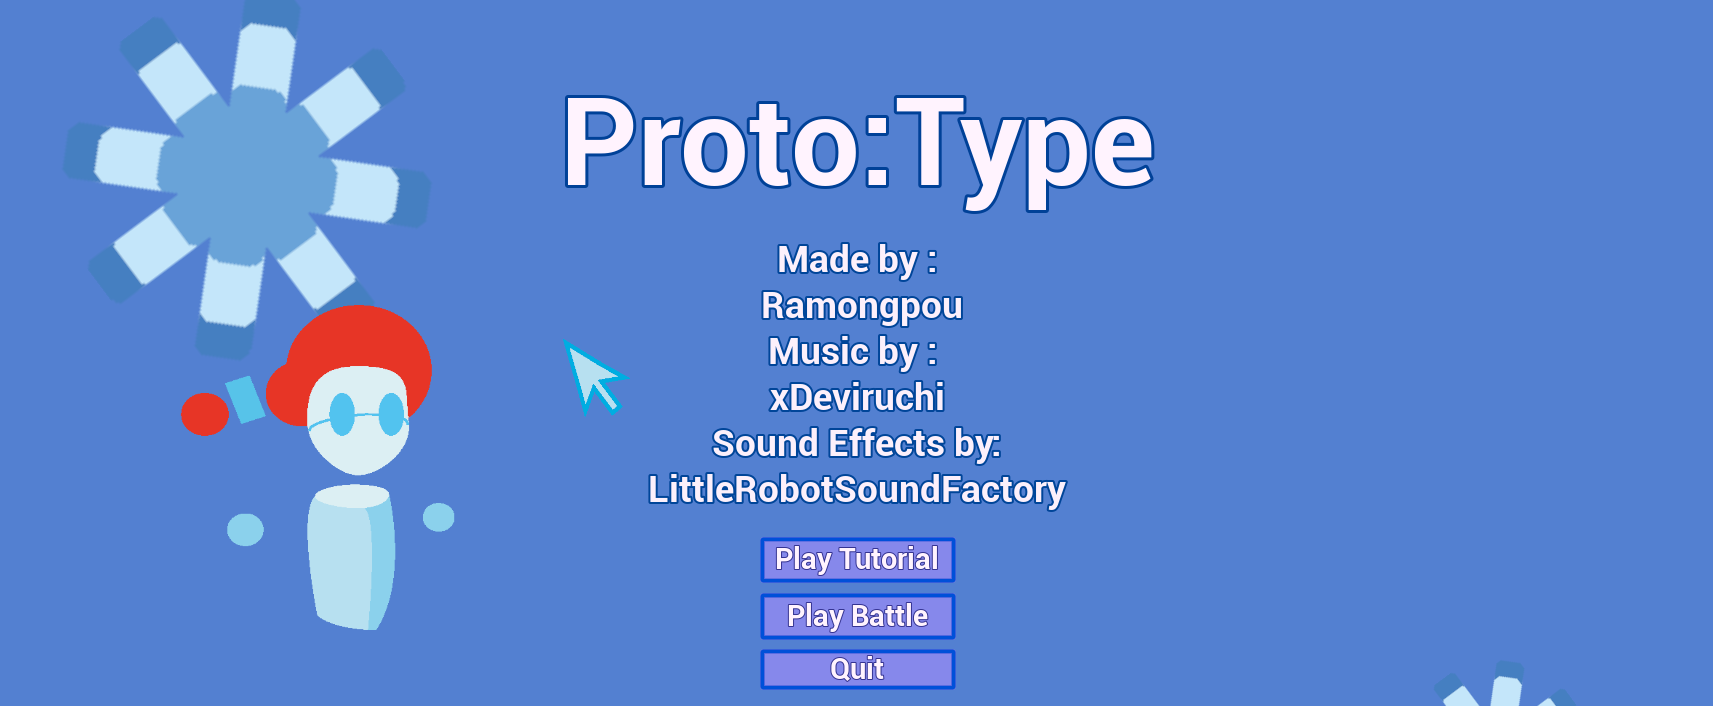 Proto: Type